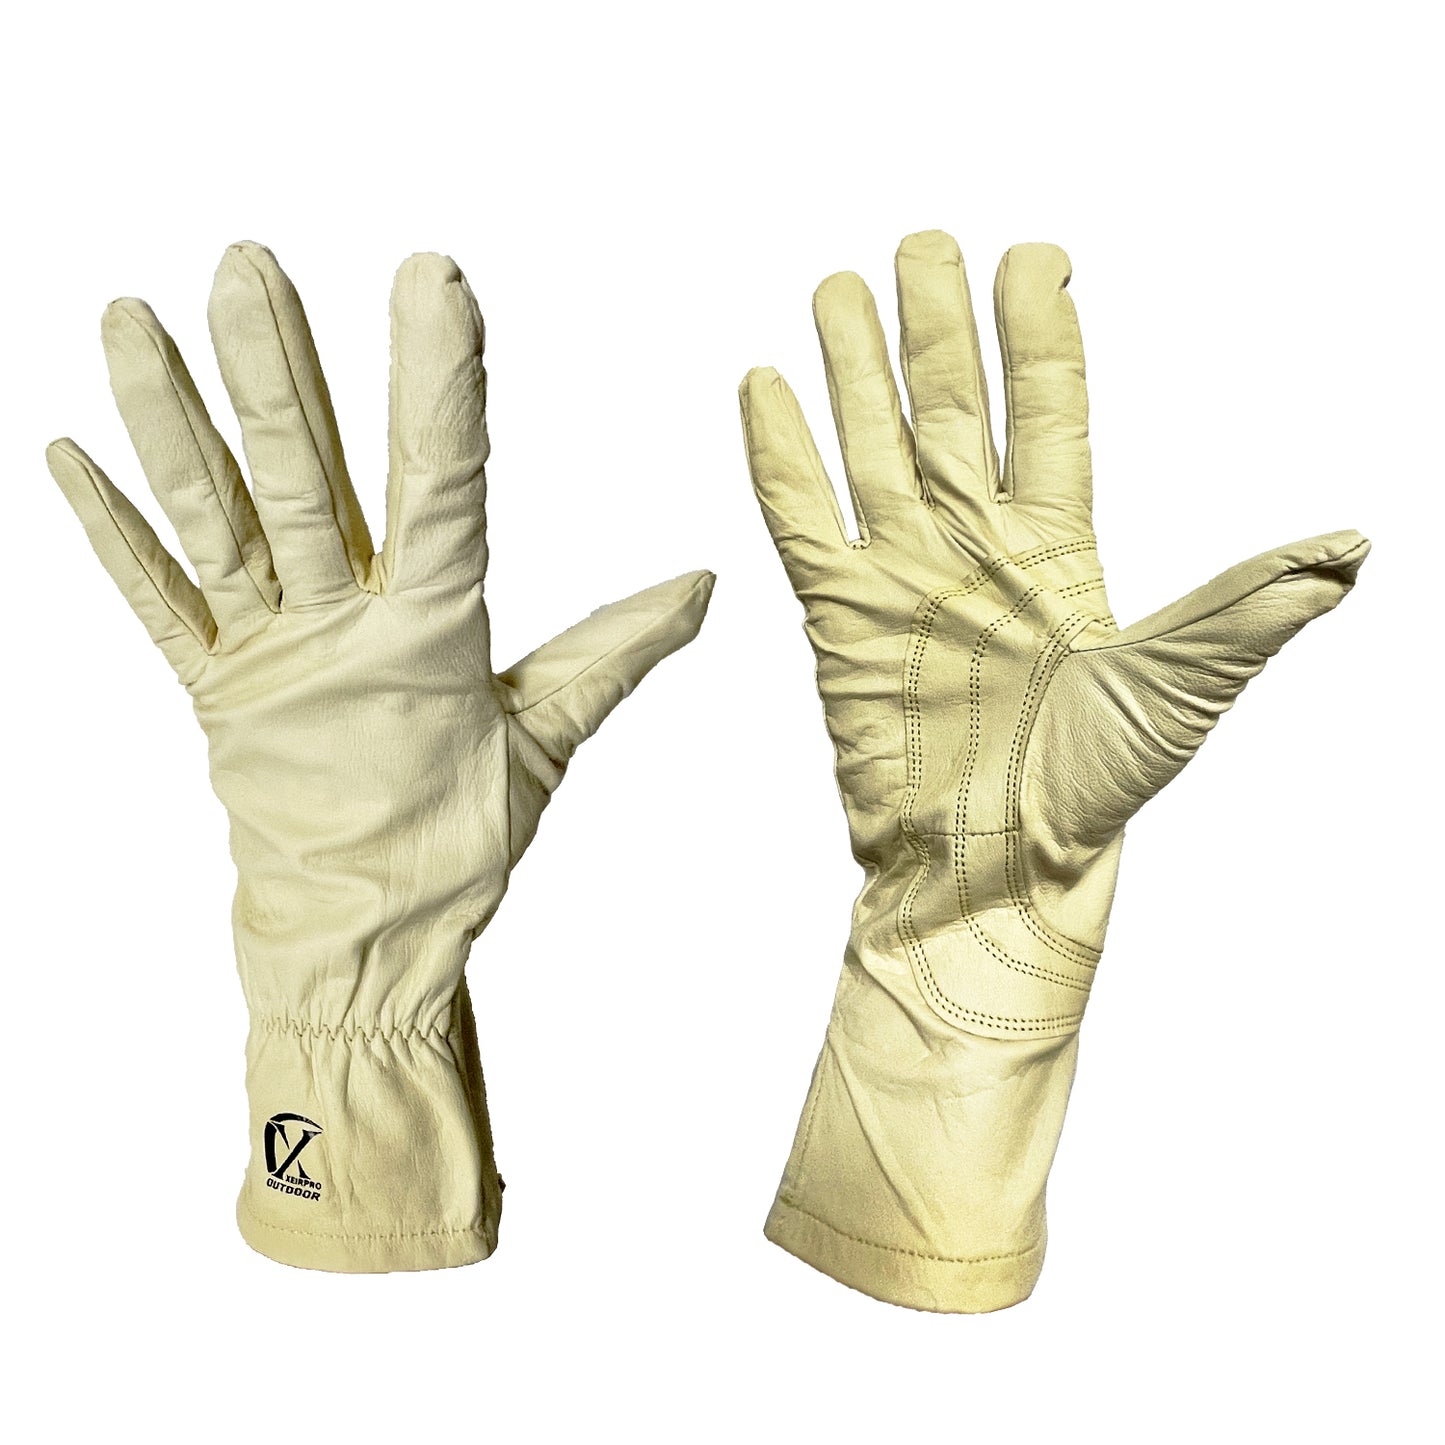 XEIR PRO Heavy Duty Goatskin Work Gloves (1 Pack)